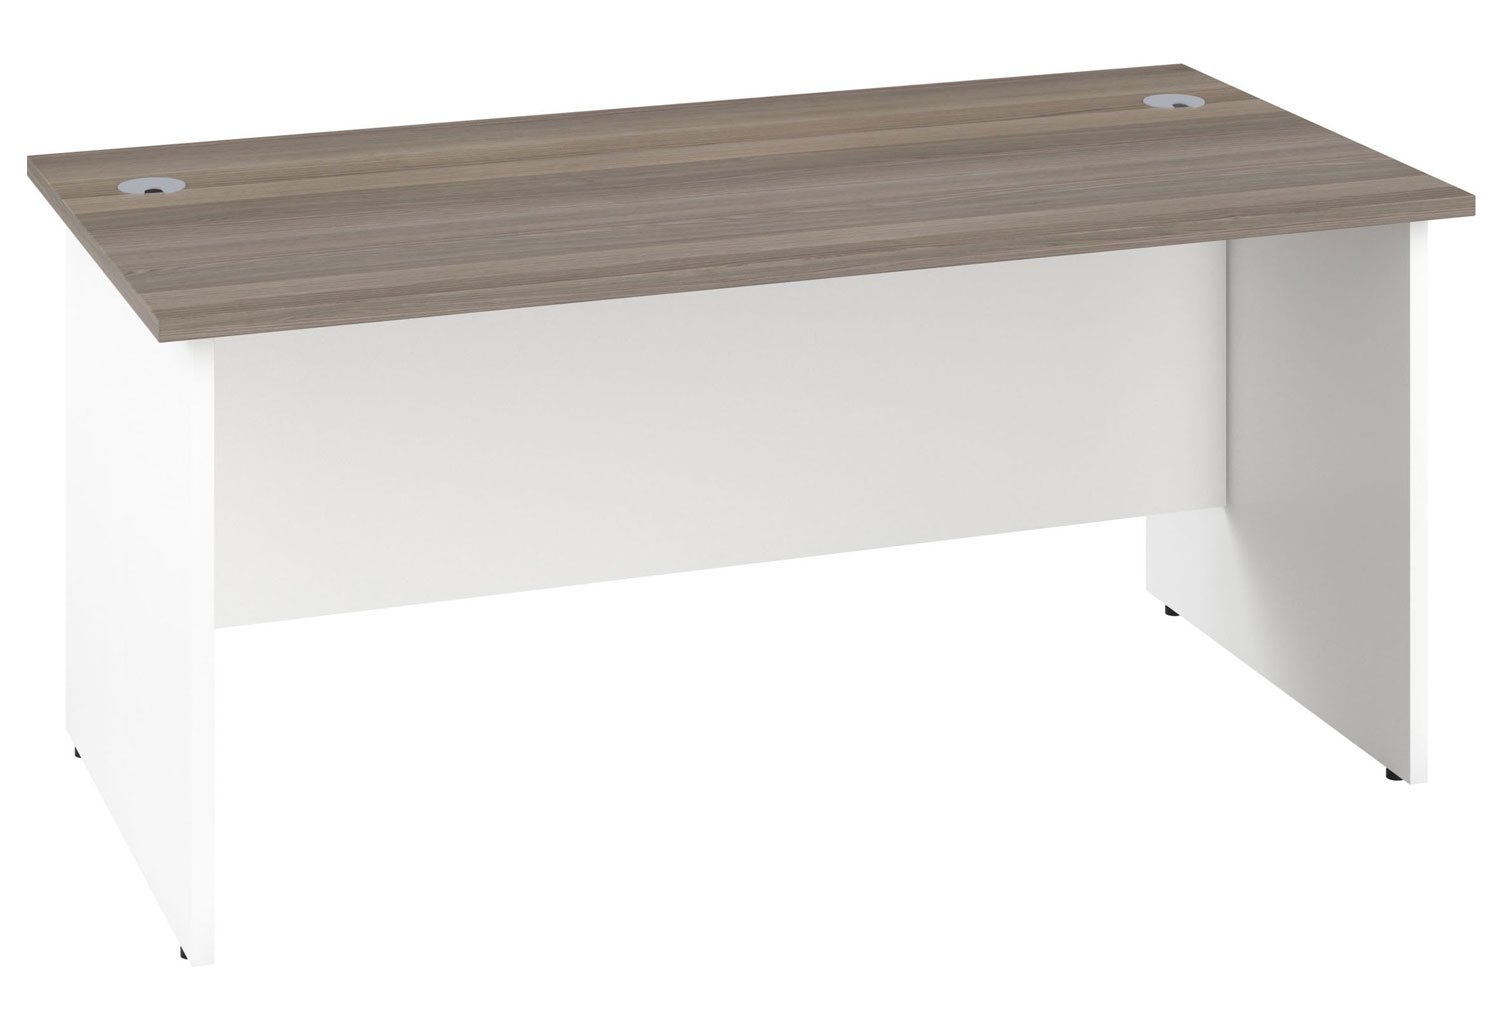 Progress Duo Panel End Narrow Rectangular Office Desk, 80wx60dx73h (cm), Grey Oak